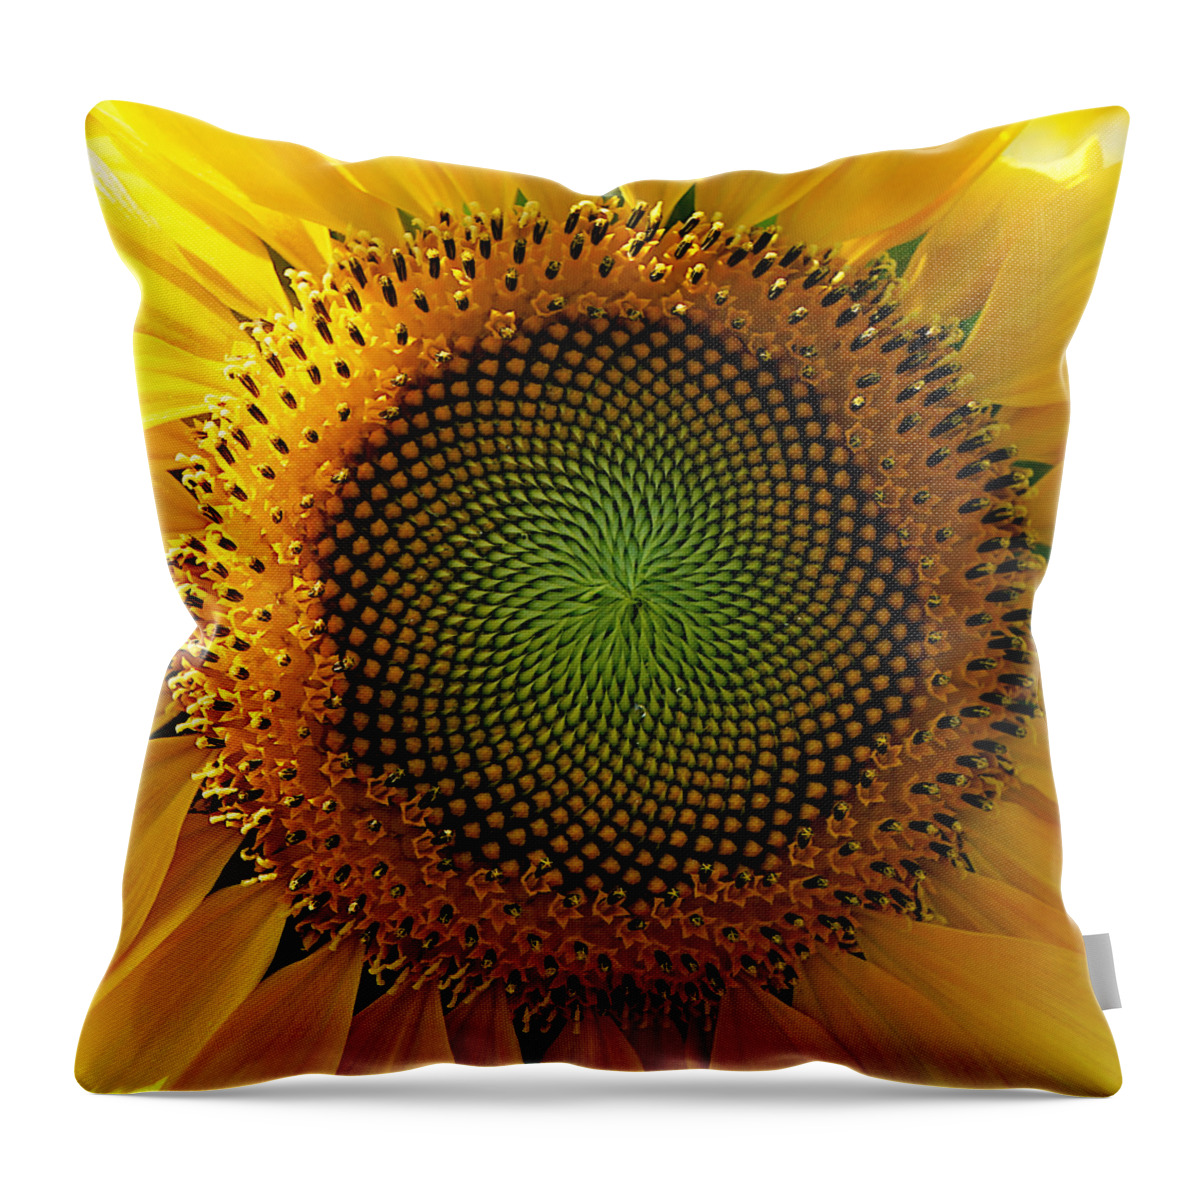 Richard Reeve Throw Pillow featuring the photograph Sunflower Spirals by Richard Reeve